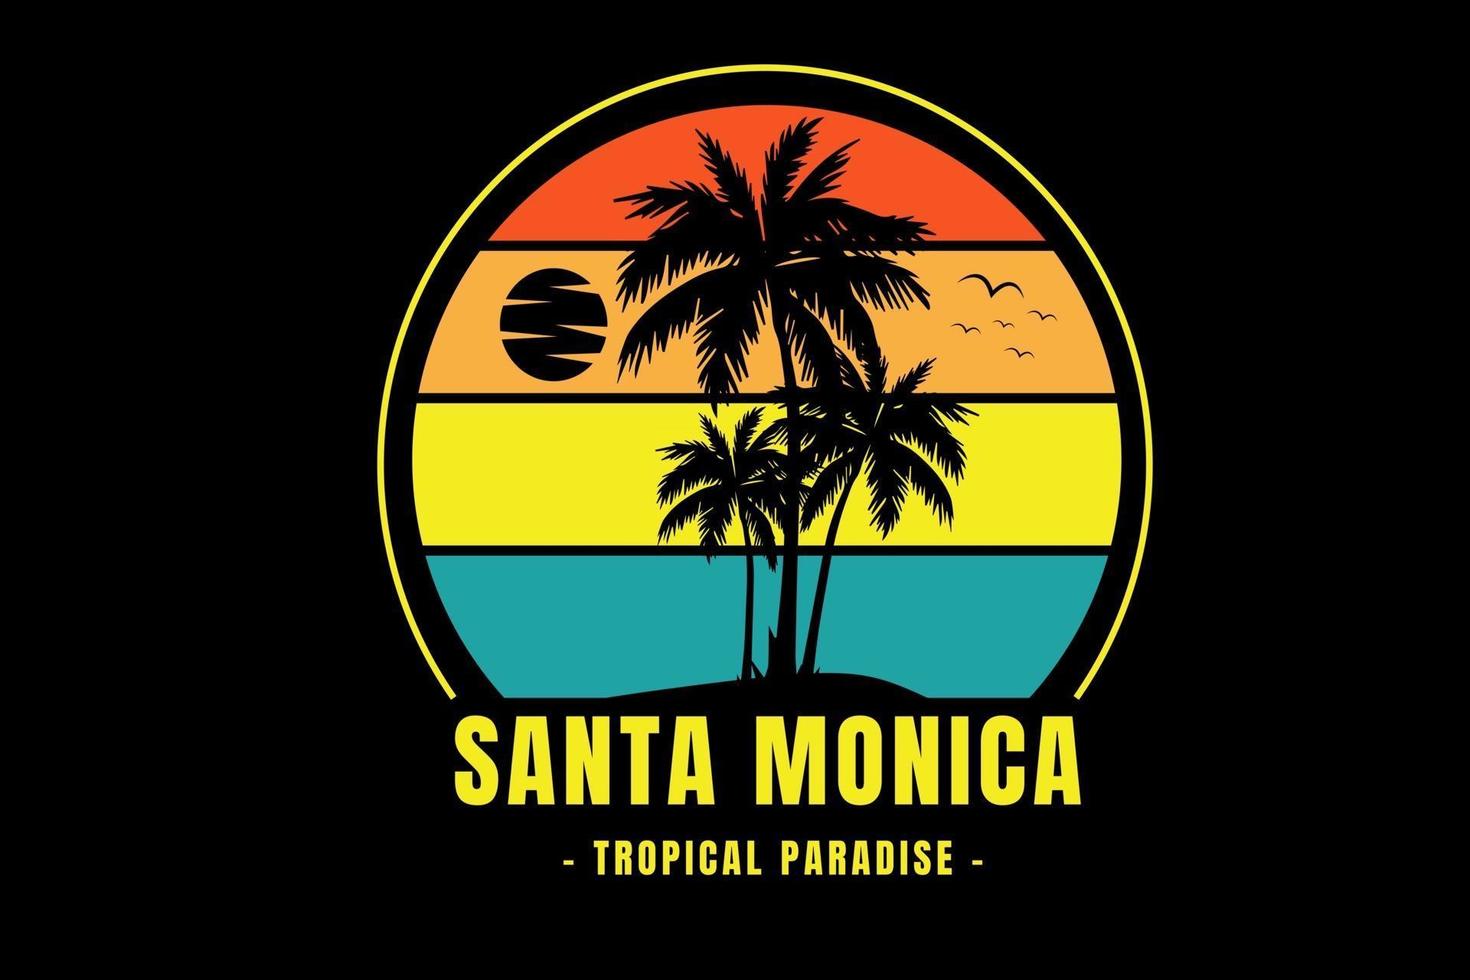 santa monica tropical paradise color yellow orange and green vector